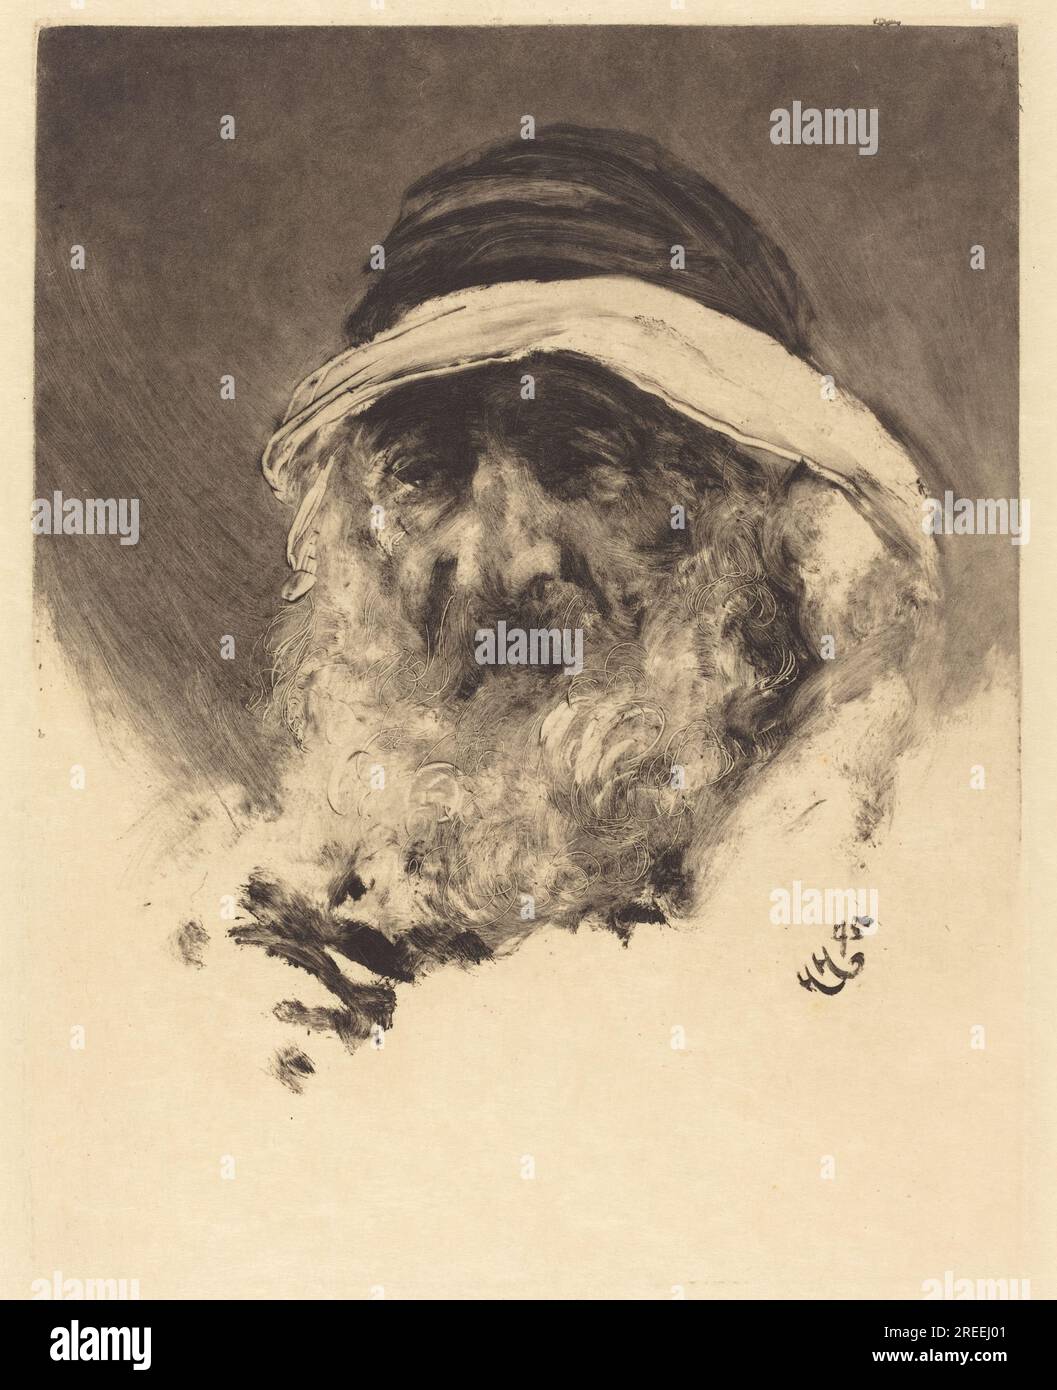 'Hubert von Herkomer, Study of an Arab Head, 1895, herkomertype on wove paper, plate: 23.1 x 18.2 cm (9 1/8 x 7 3/16 in.) sheet: 30.5 x 23.1 cm (12 x 9 1/8 in.), Gift of Jacob Kainen, 2002.98.129' Stock Photo